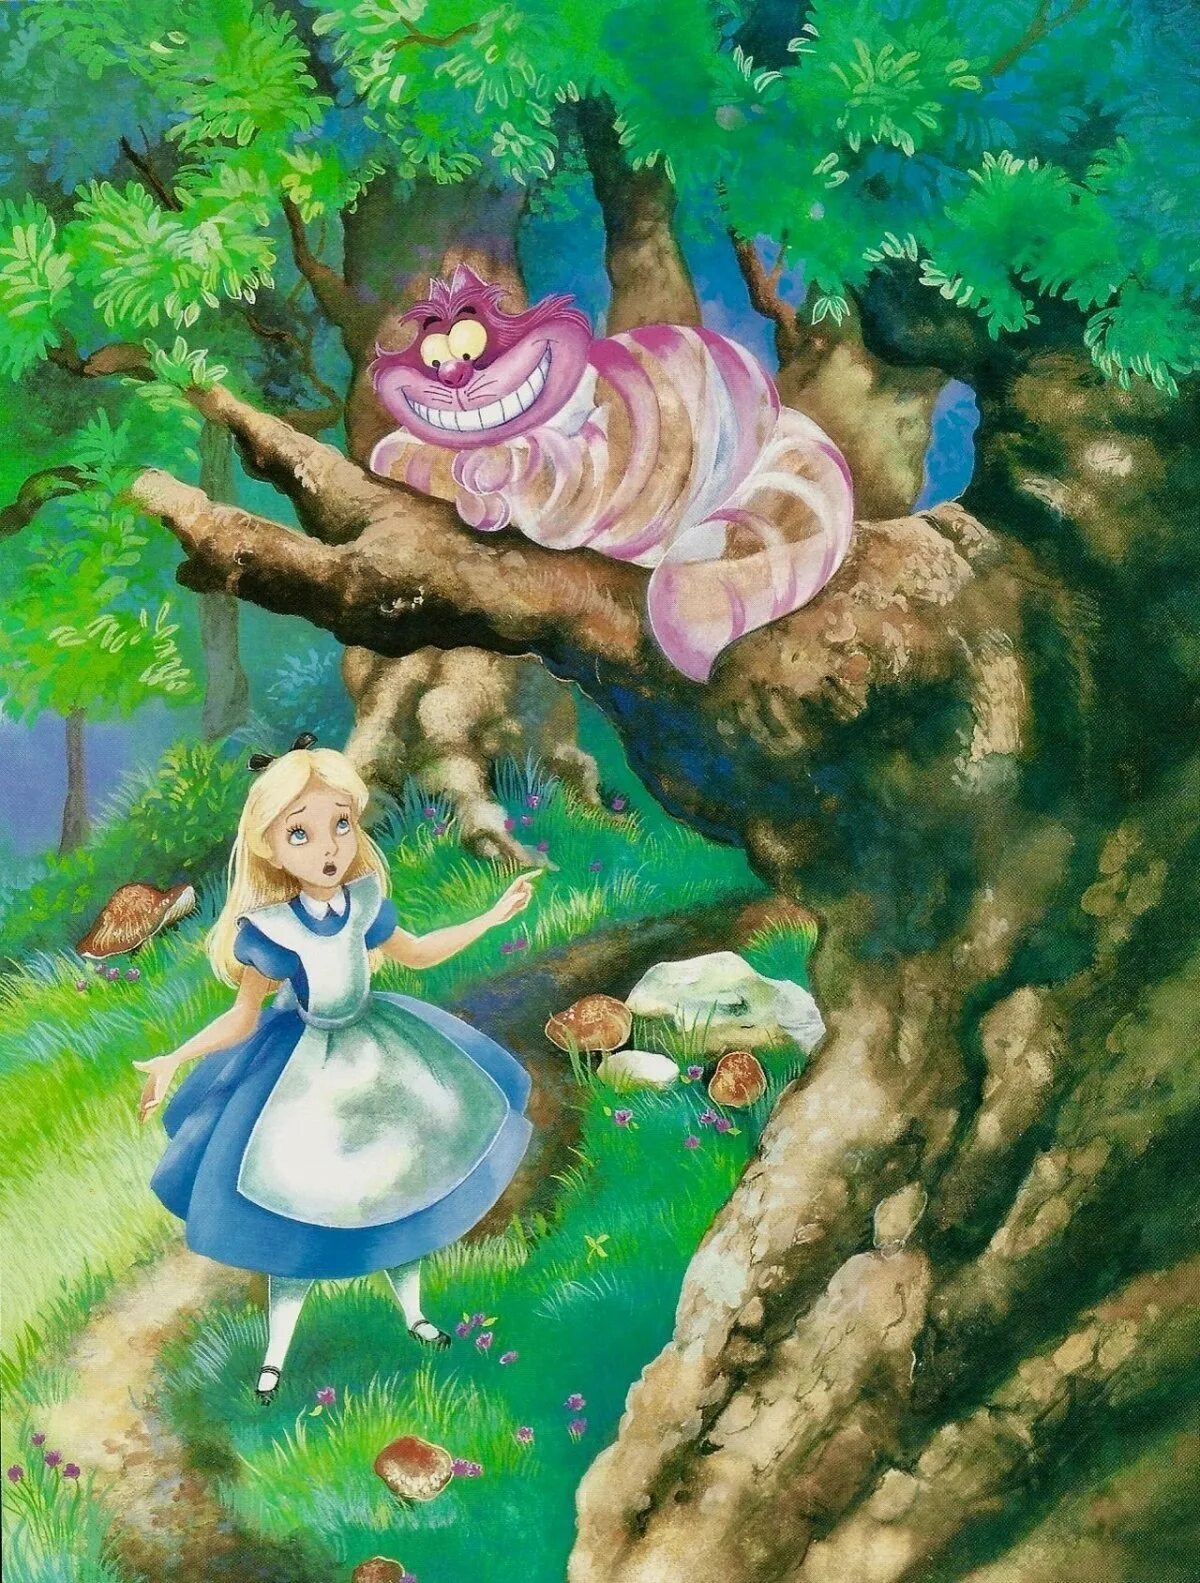 Сказка алиса в стране чудес словами. Алиса и Чеширский кот Дисней. Чеширский кот Алиса в стране чудес. Алиса в стране чудес сказка. Алиса в стране чудес Алиса.